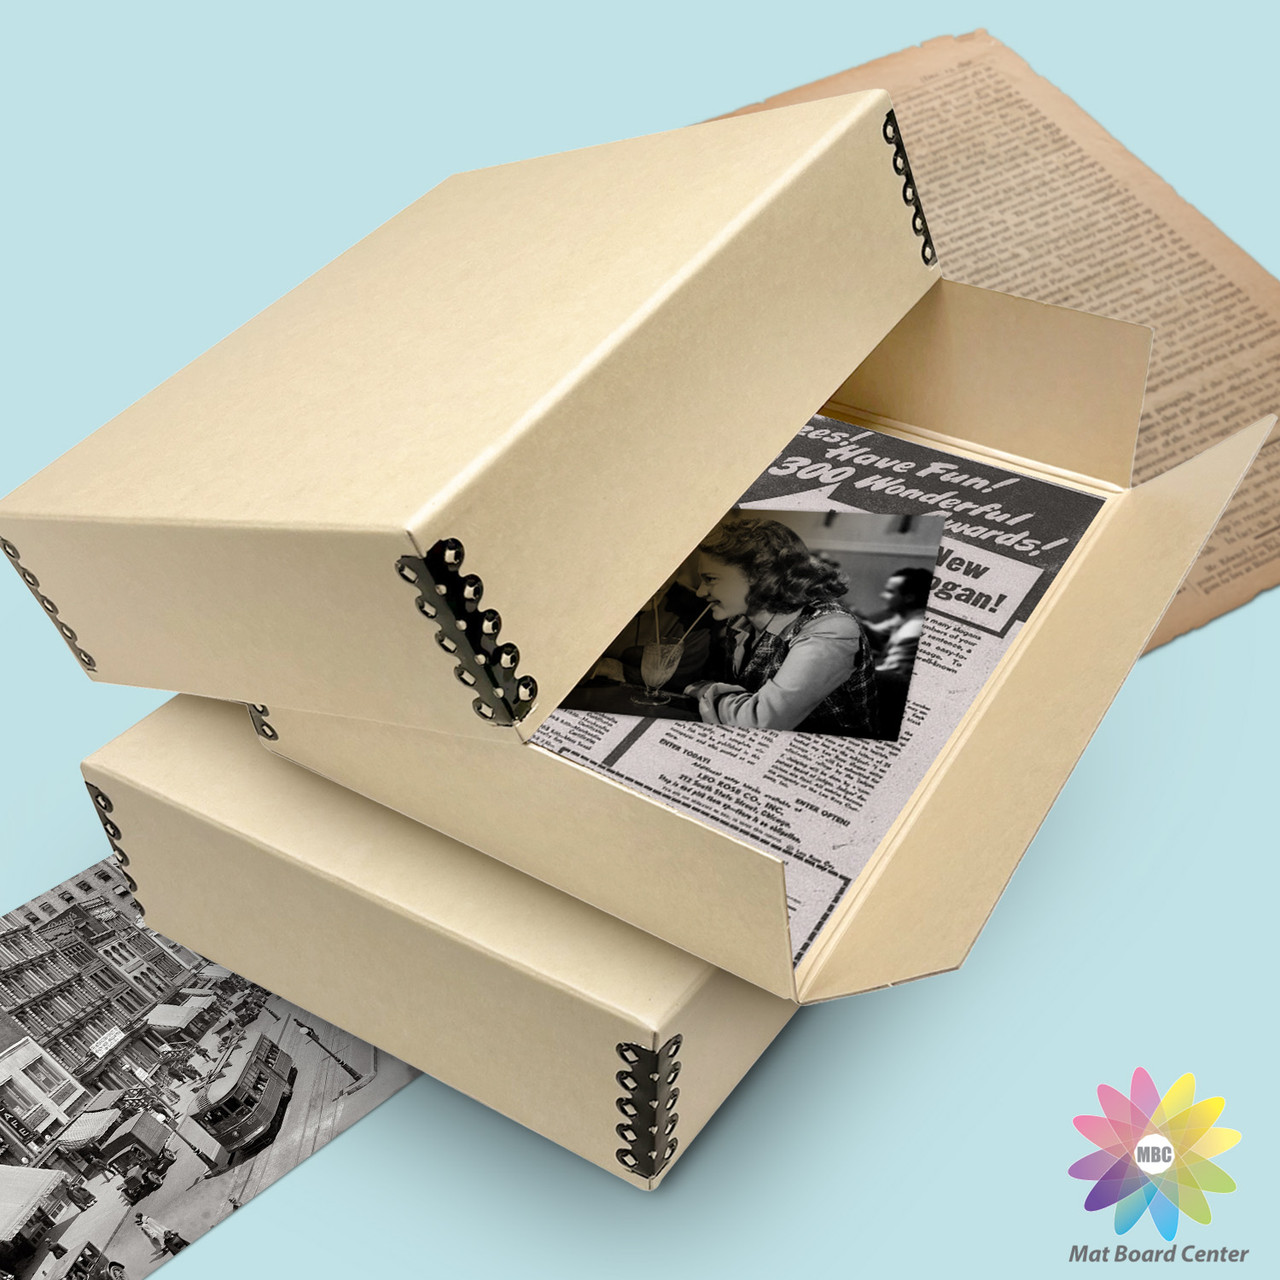 Lineco/University Products Museum Storage Box, 8 X 10